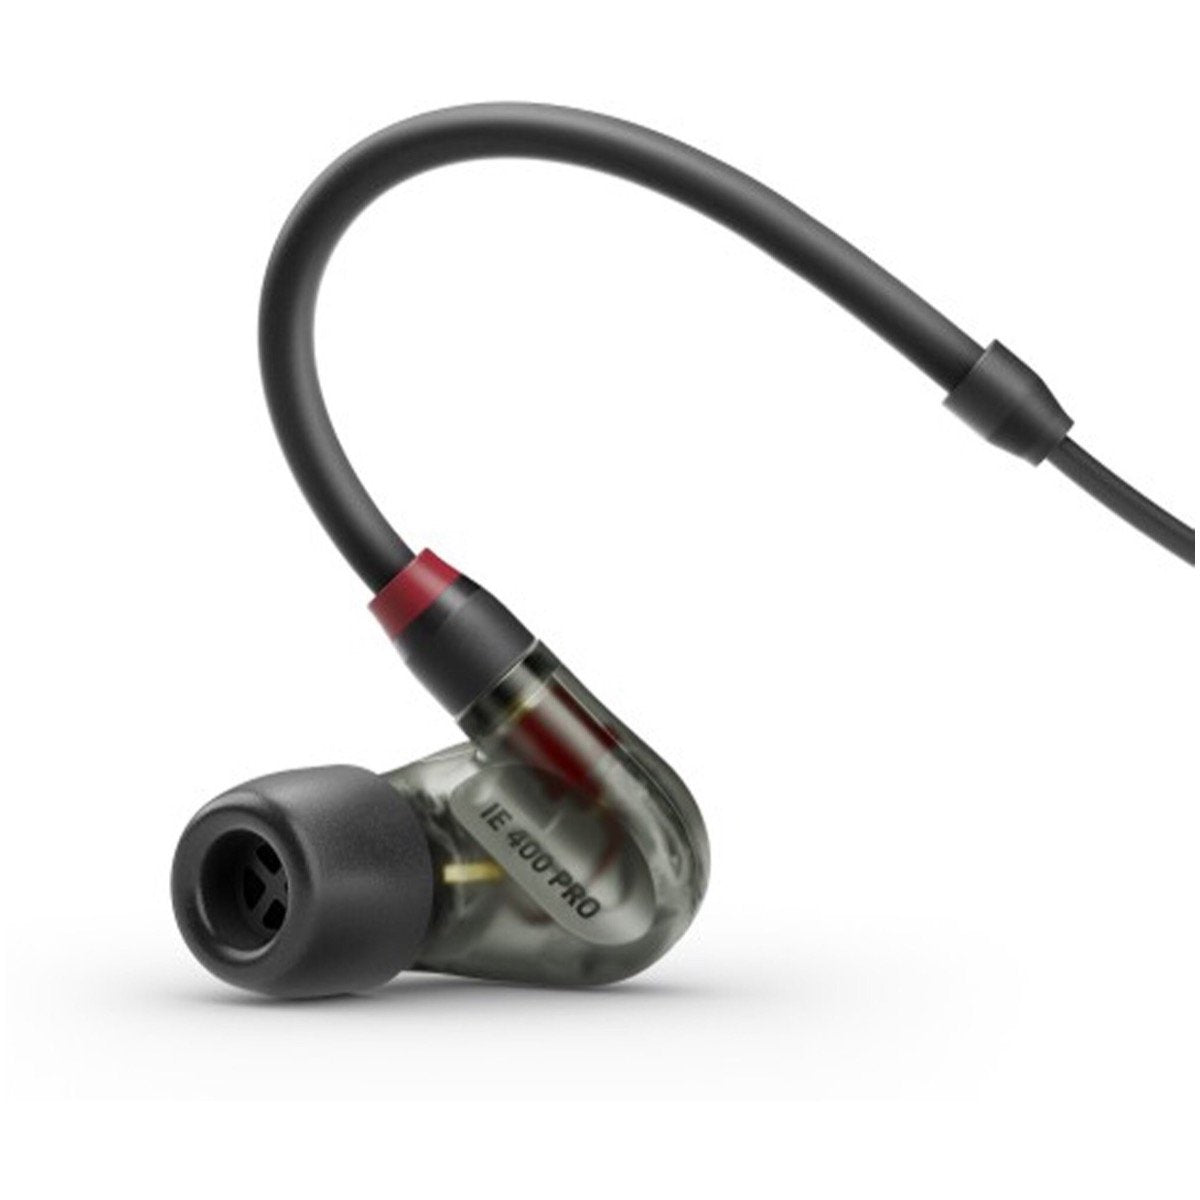 Sennheiser IE-400 Pro In-Ear Monitoring Headphones, Smokey Black